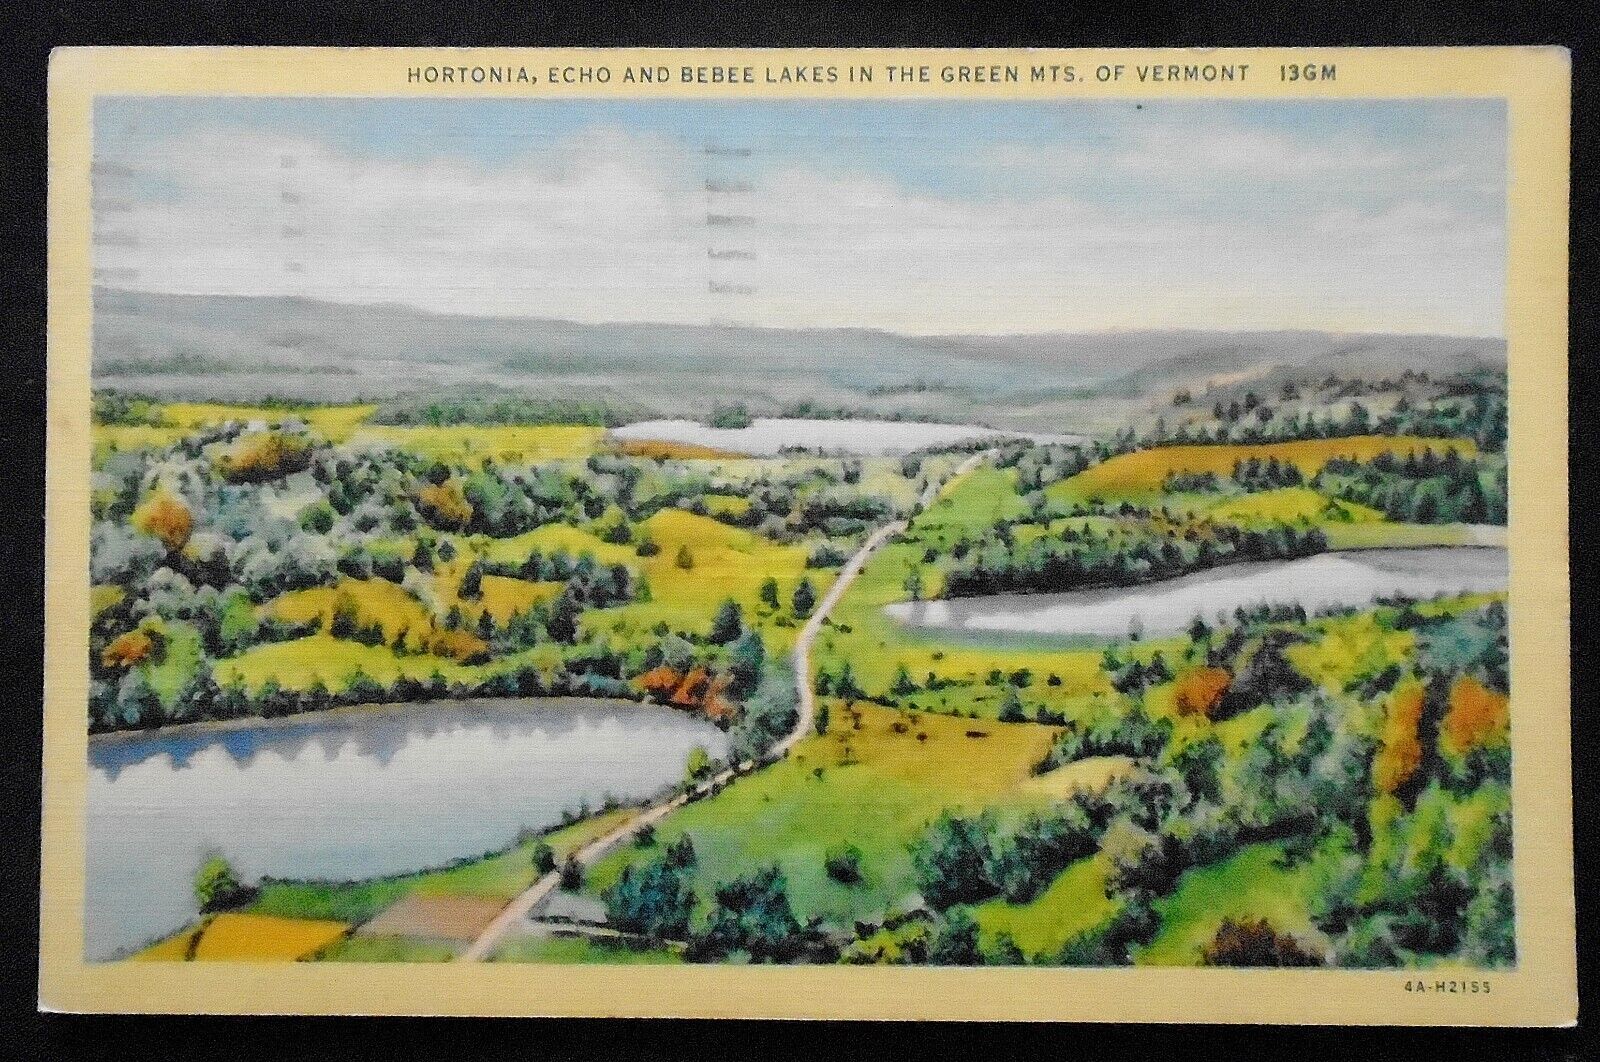 Green Mts, VT, Hortonia & Bebee Lakes, 1932